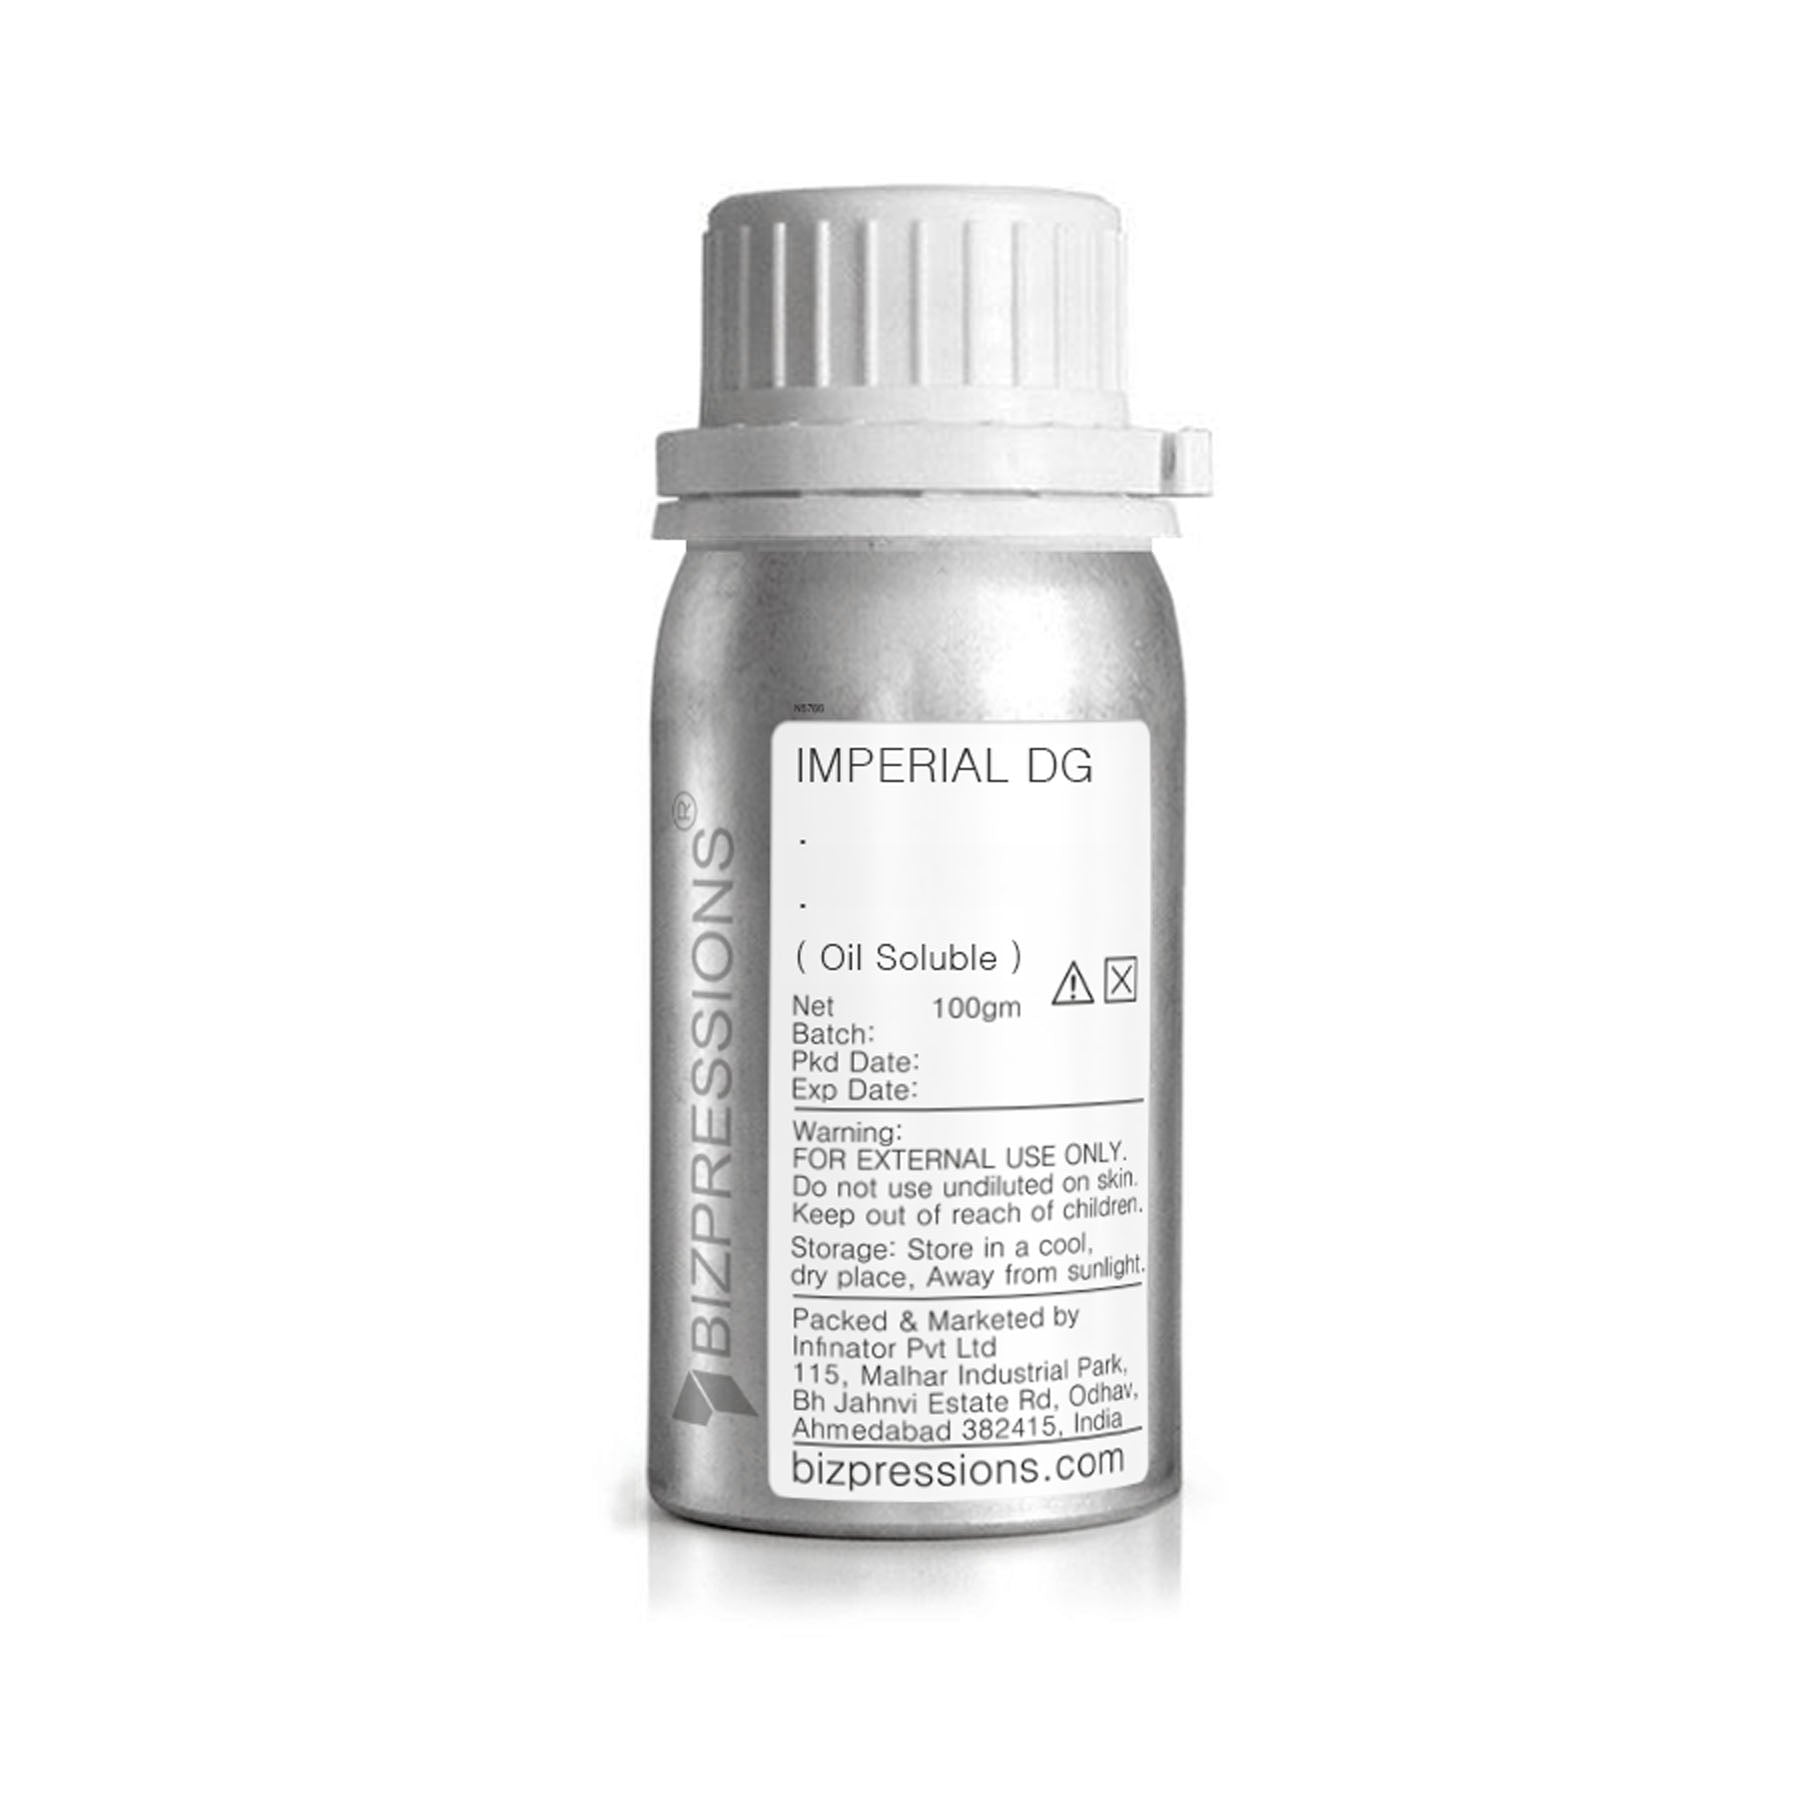 IMPERIAL DG - Fragrance ( Oil Soluble ) - 100 gm